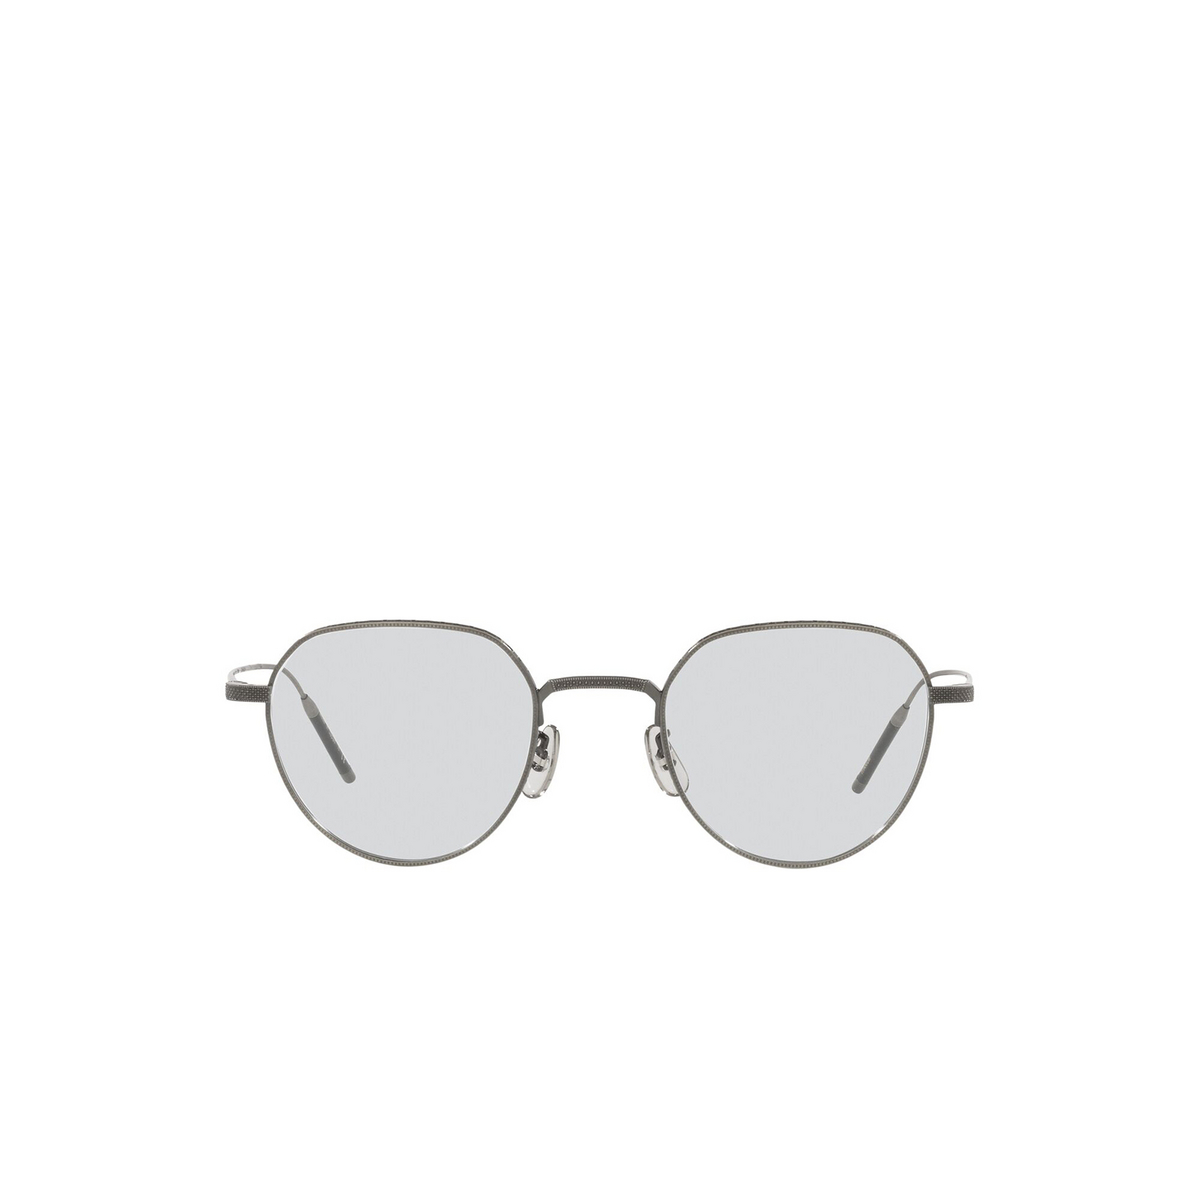 Oliver Peoples® Round Eyeglasses: Tk-2 OV1275T color Pewter 5076 - front view.